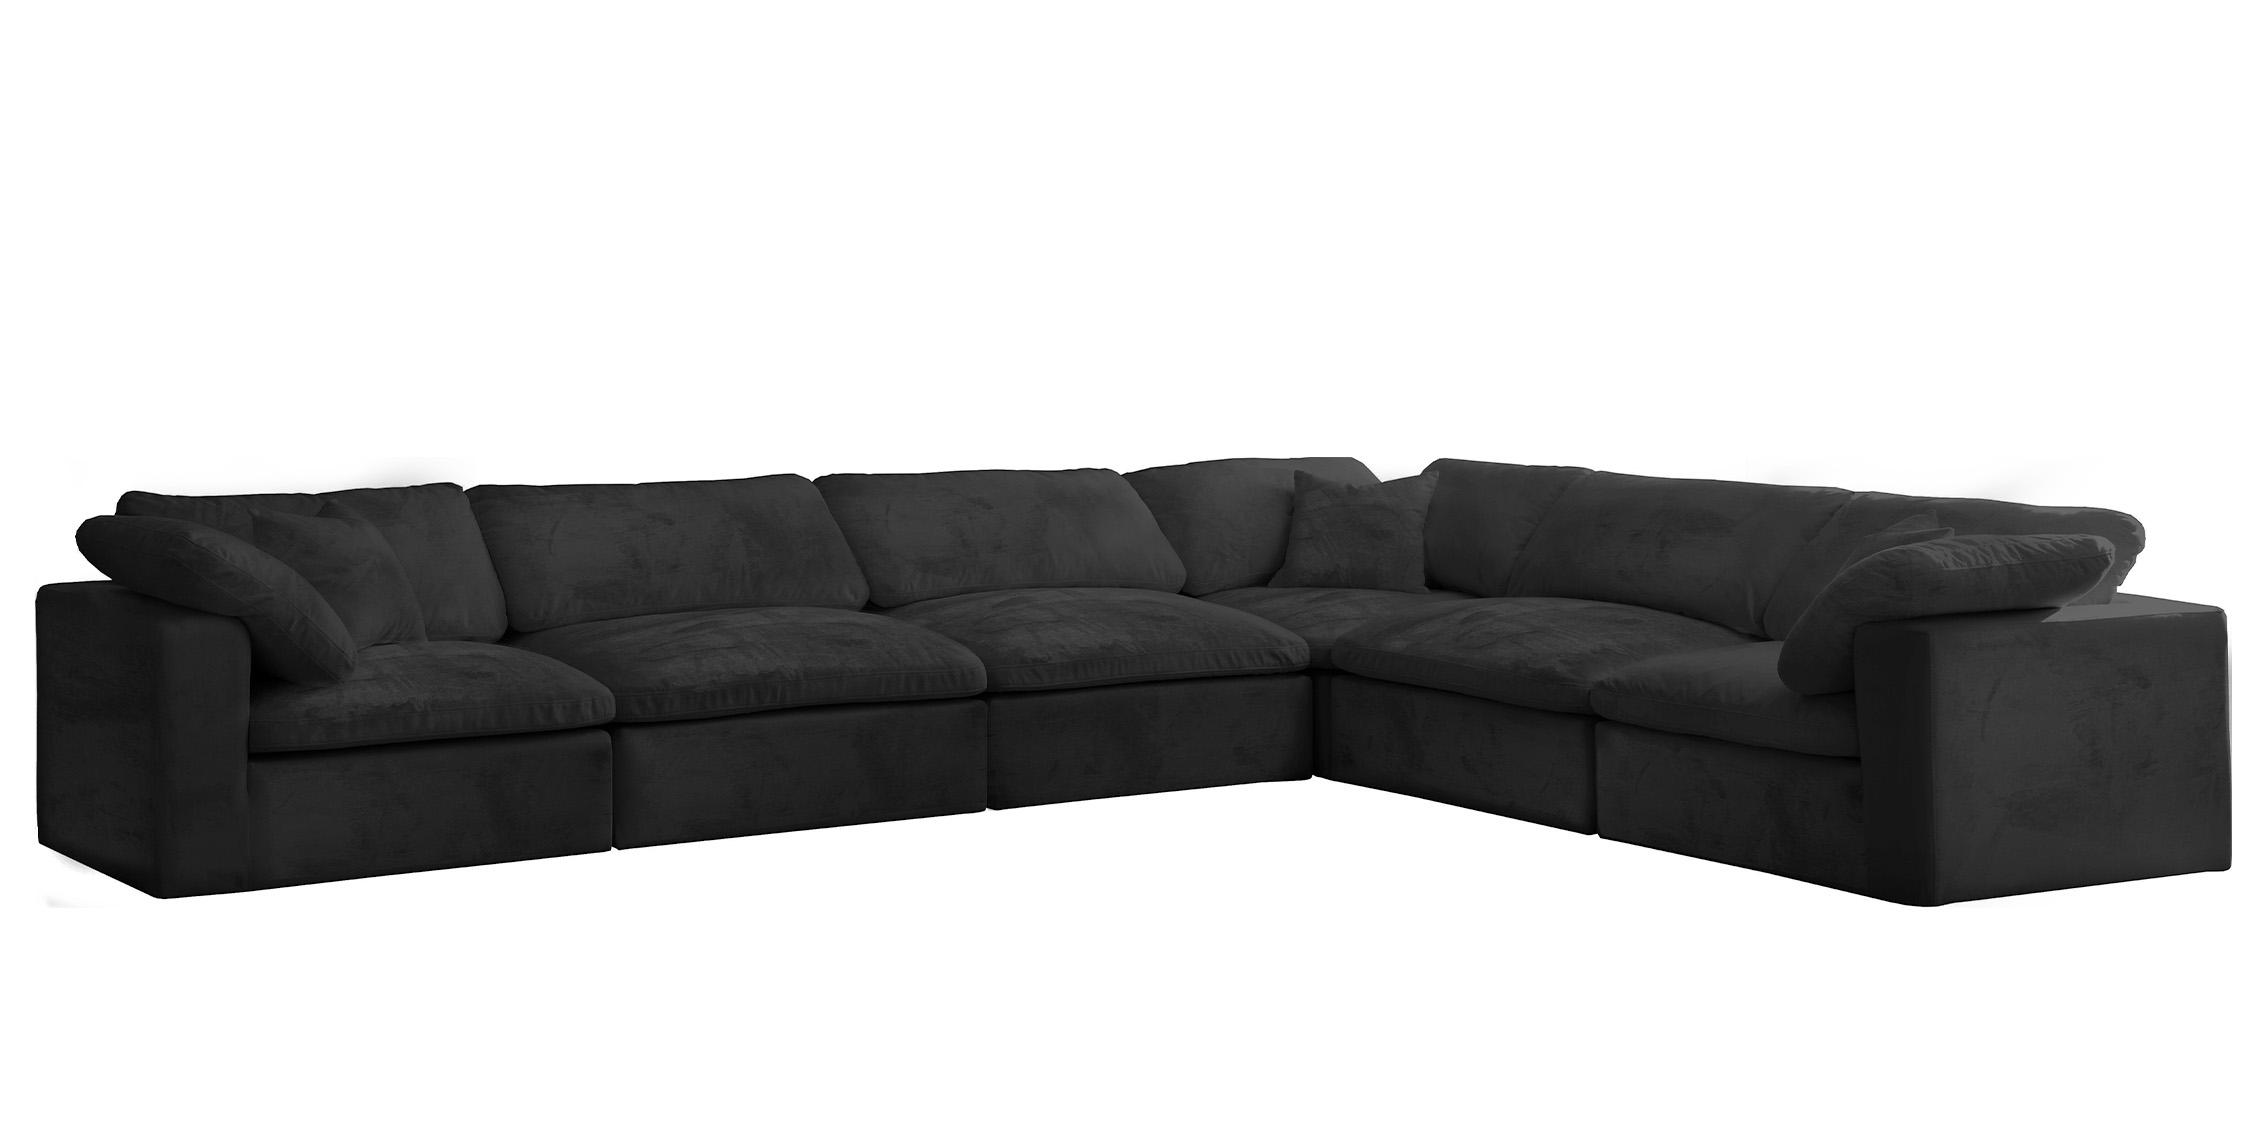 Contemporary, Modern Modular Sectional Sofa 634Black-Sec6A 634Black-Sec6A in Black Fabric